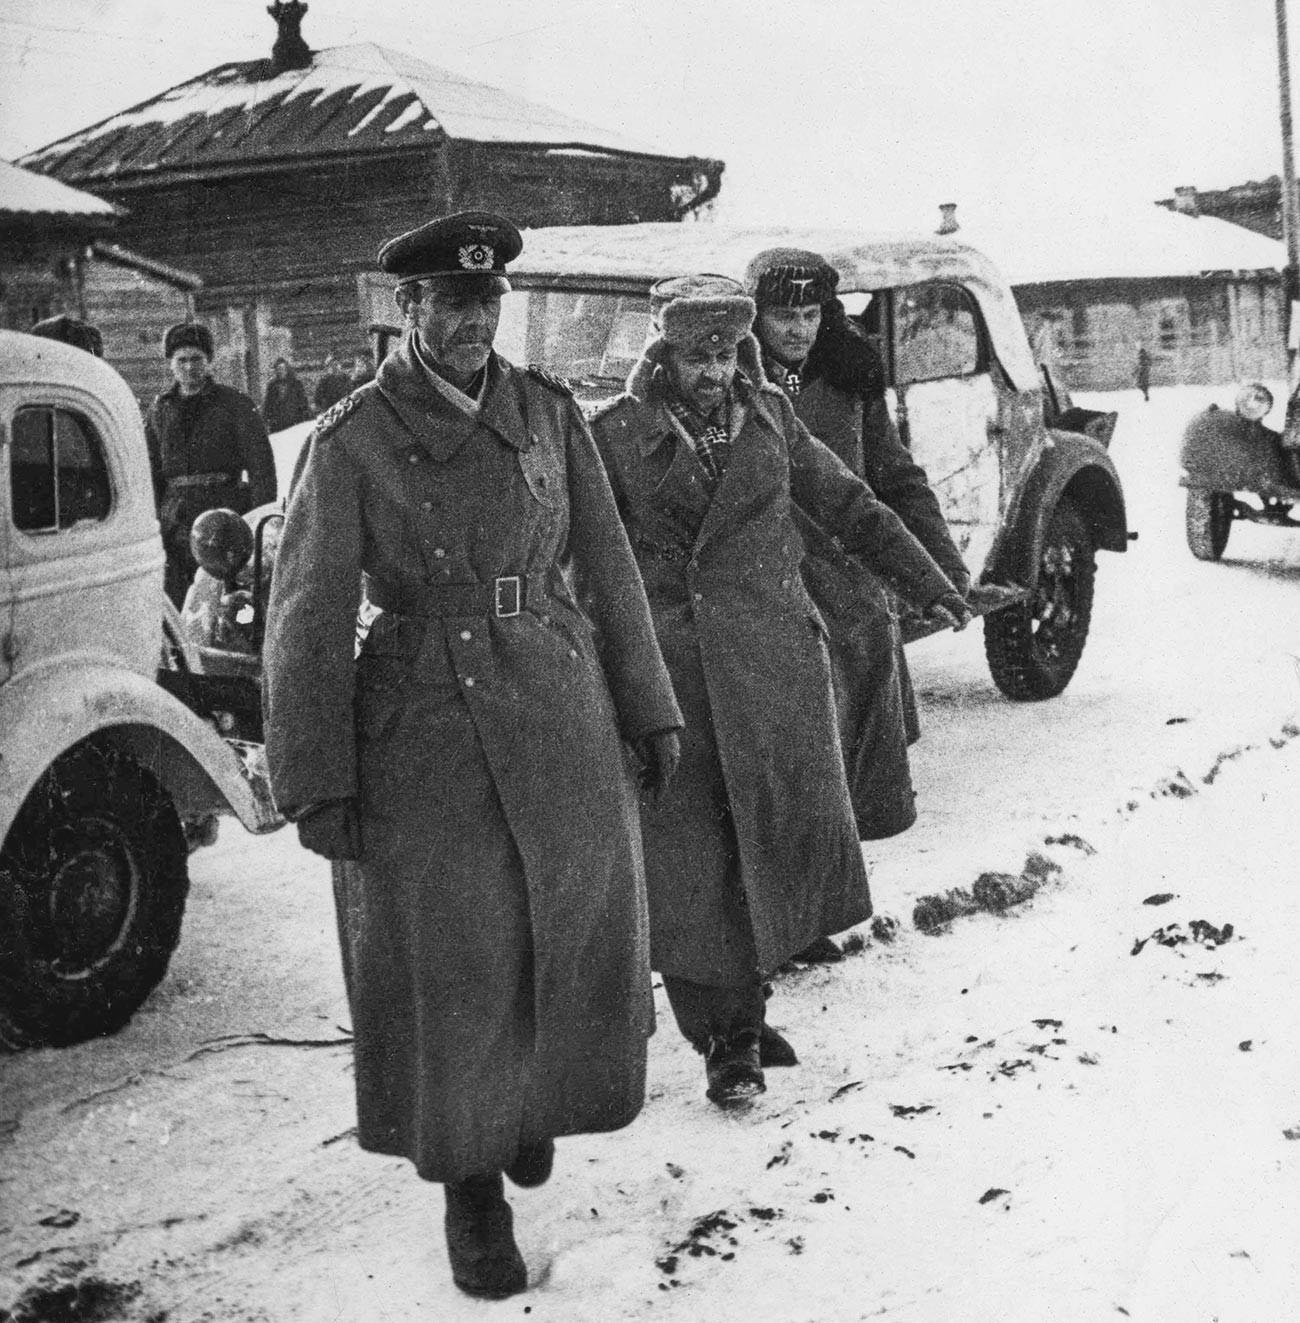 Field-Marshal Friedrich Paulus and his staff taken prisoner in Stalingrad.